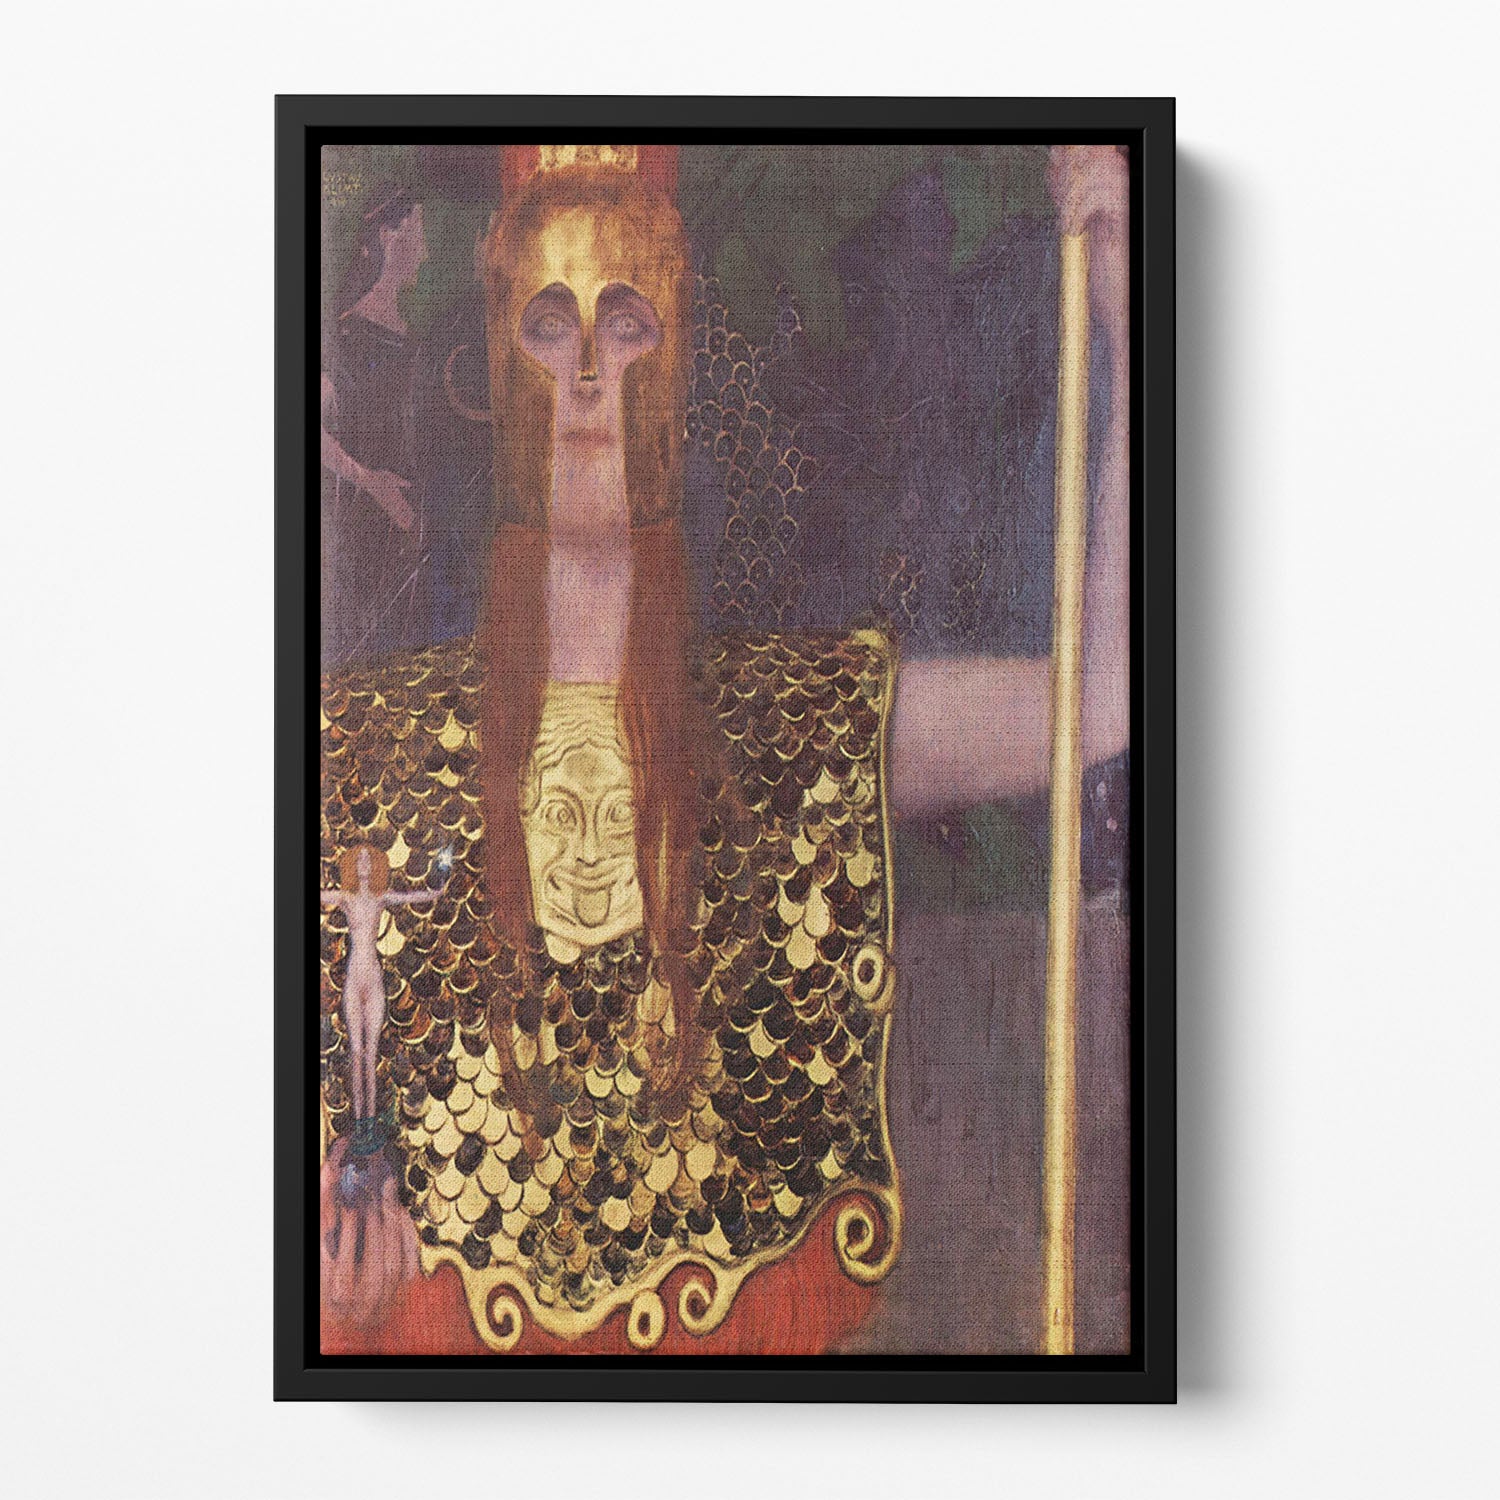 Pallas Athena by Klimt Floating Framed Canvas